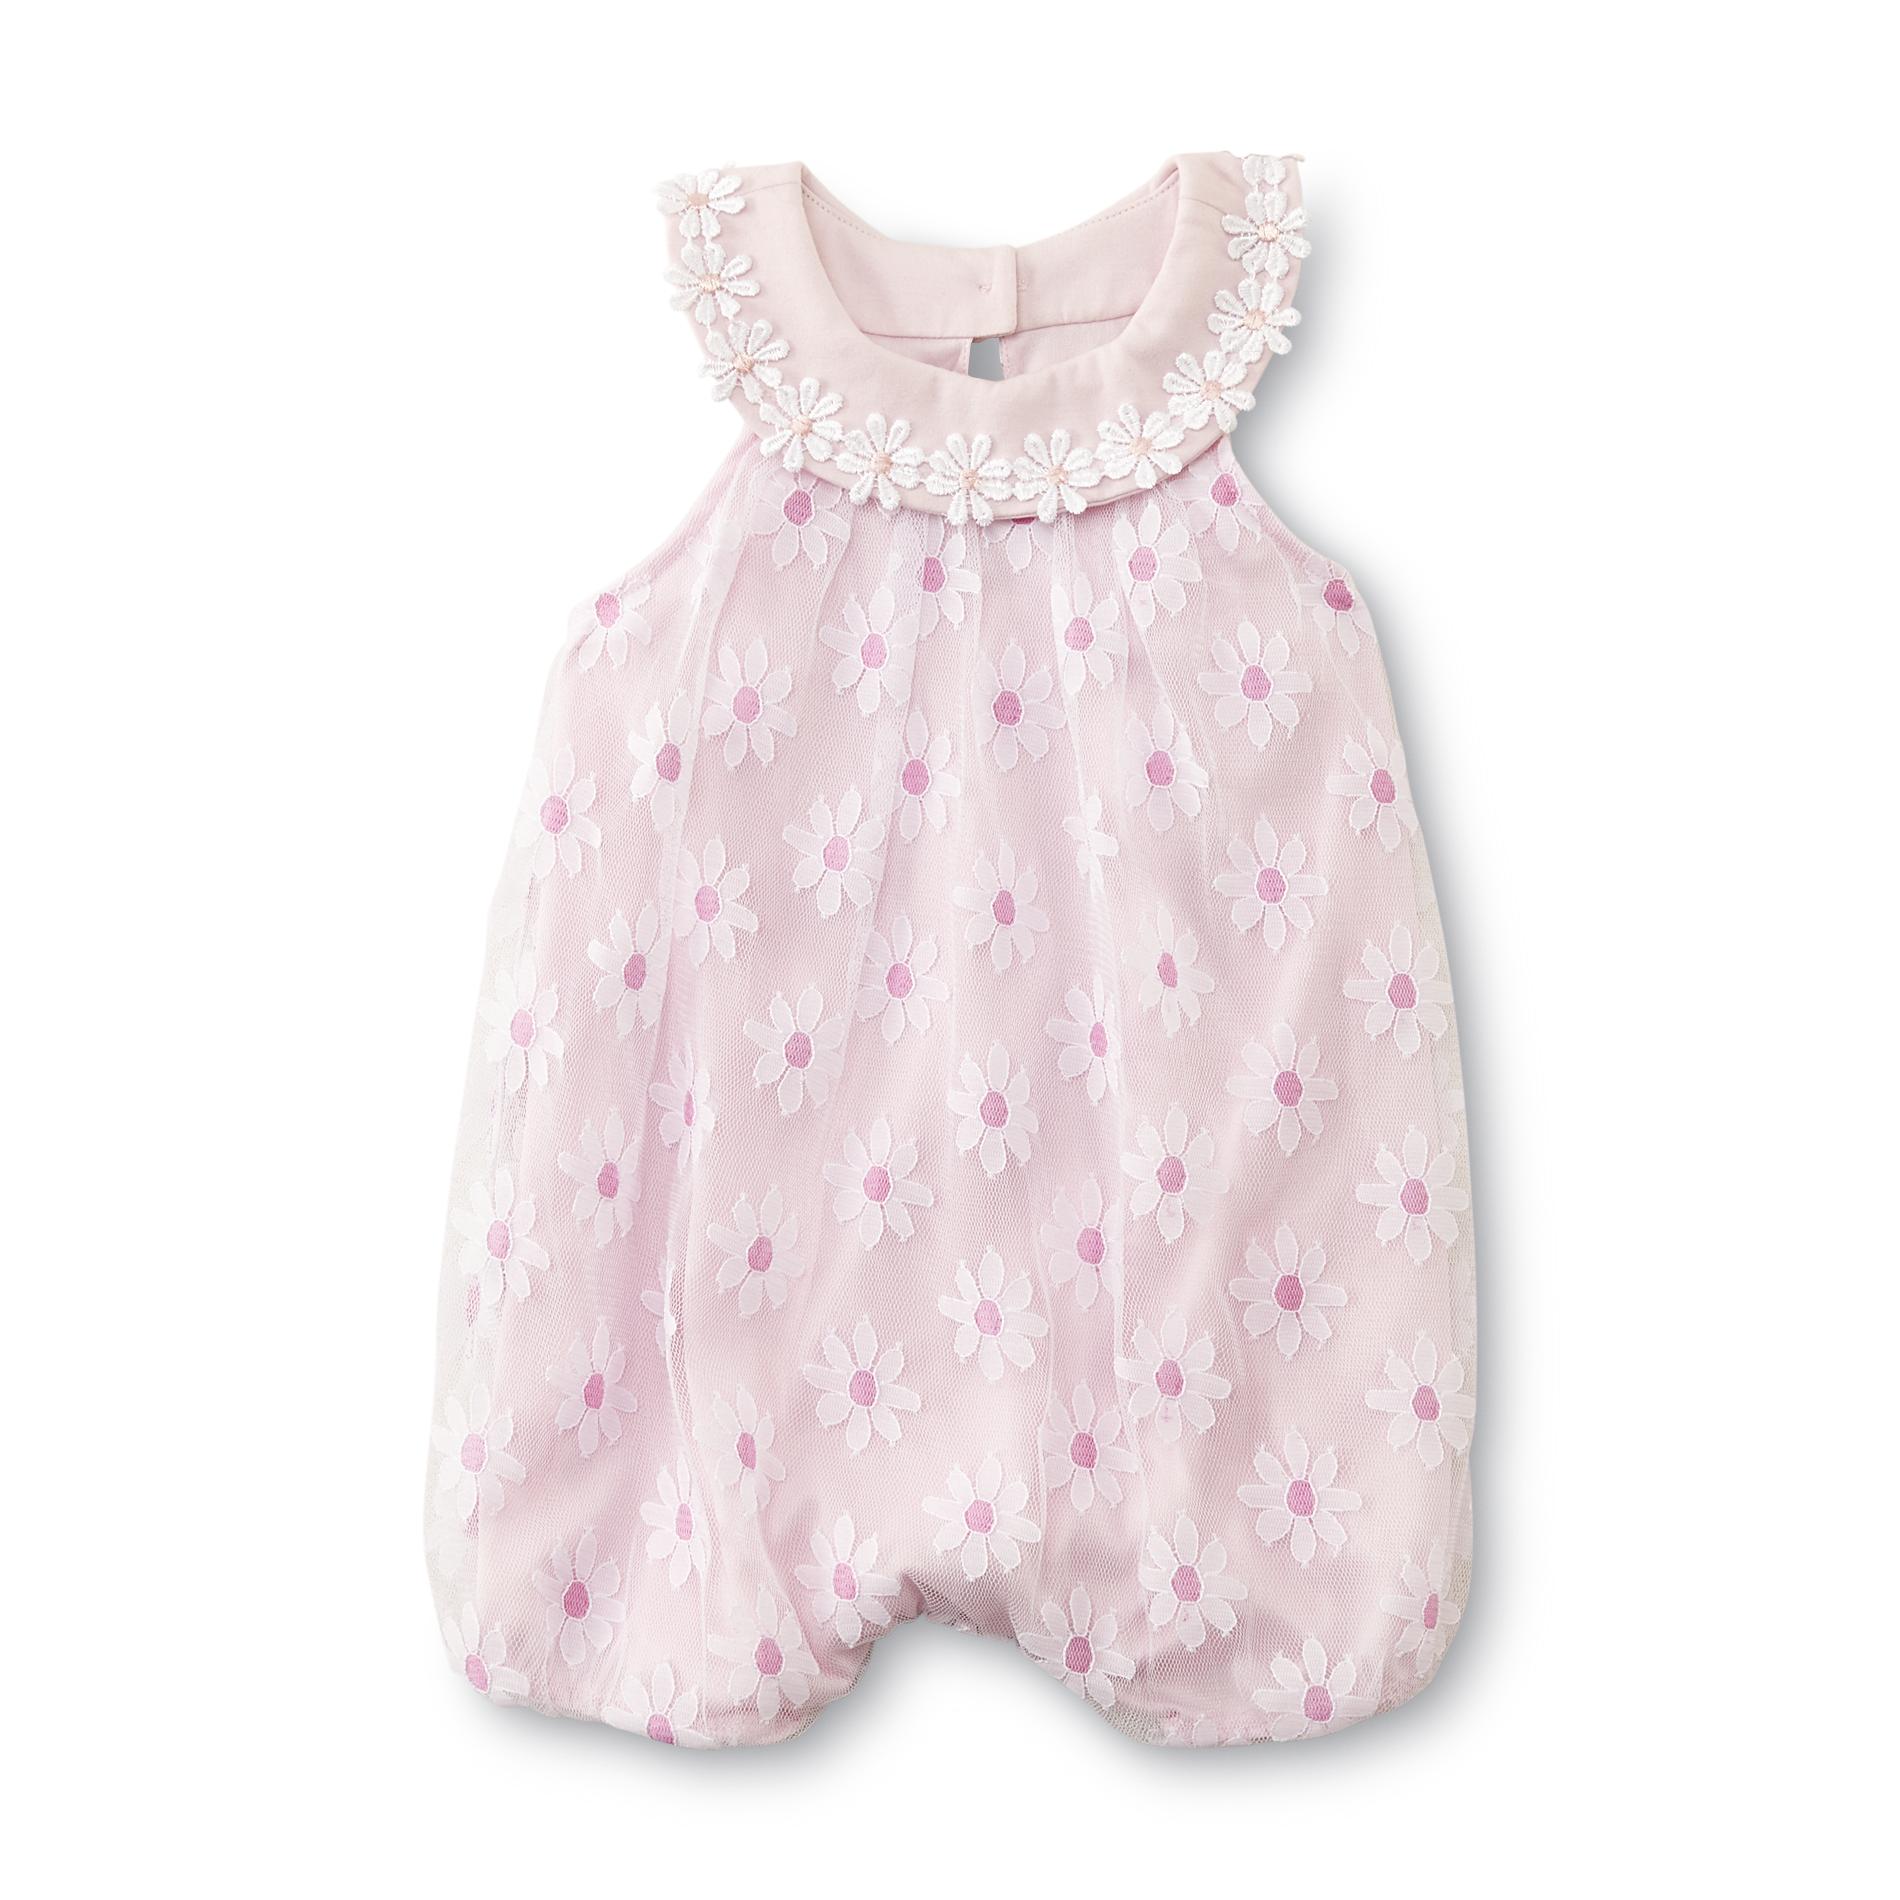 Baby Grand Signature Infant Girl's Mesh Sleeveless Dress - Daisy